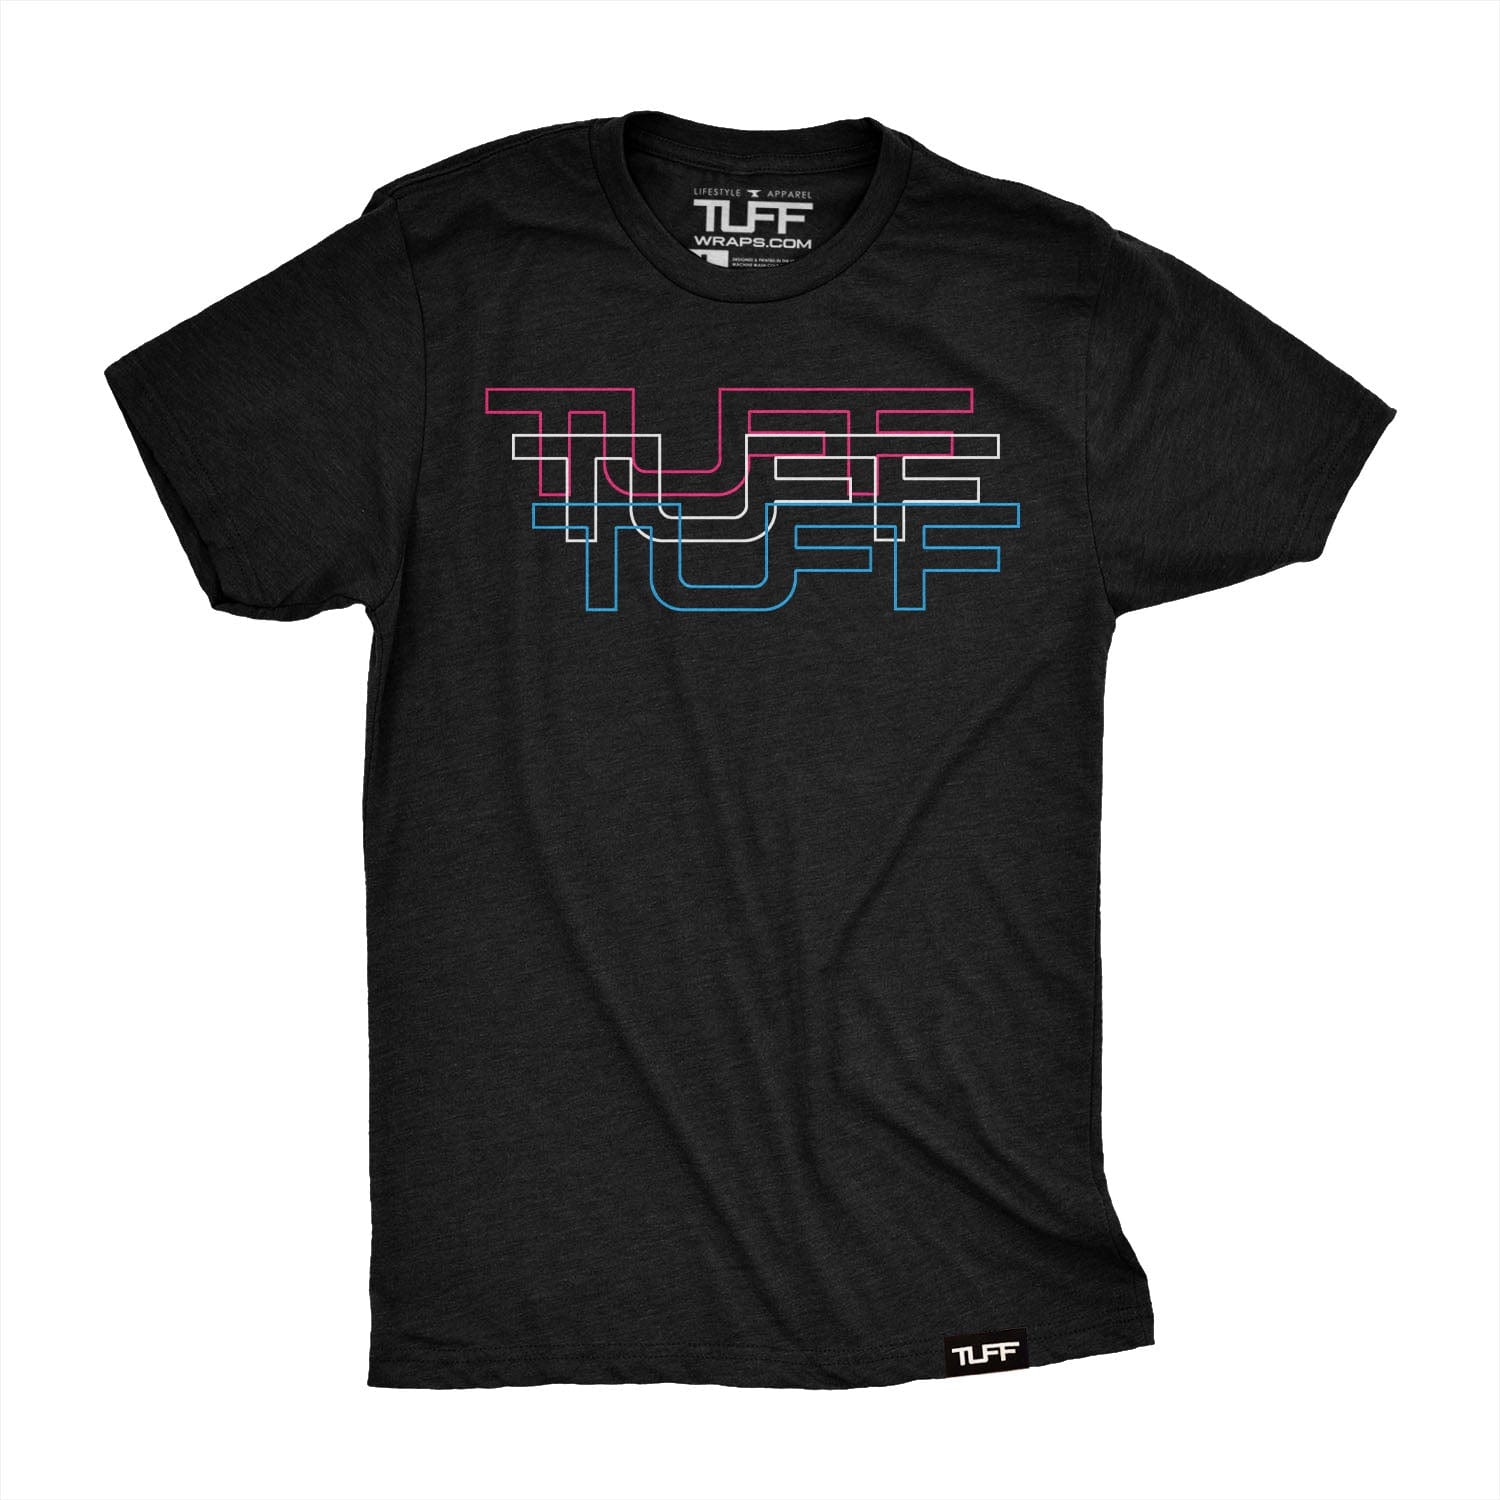 Triple TUFF Tee T-shirt